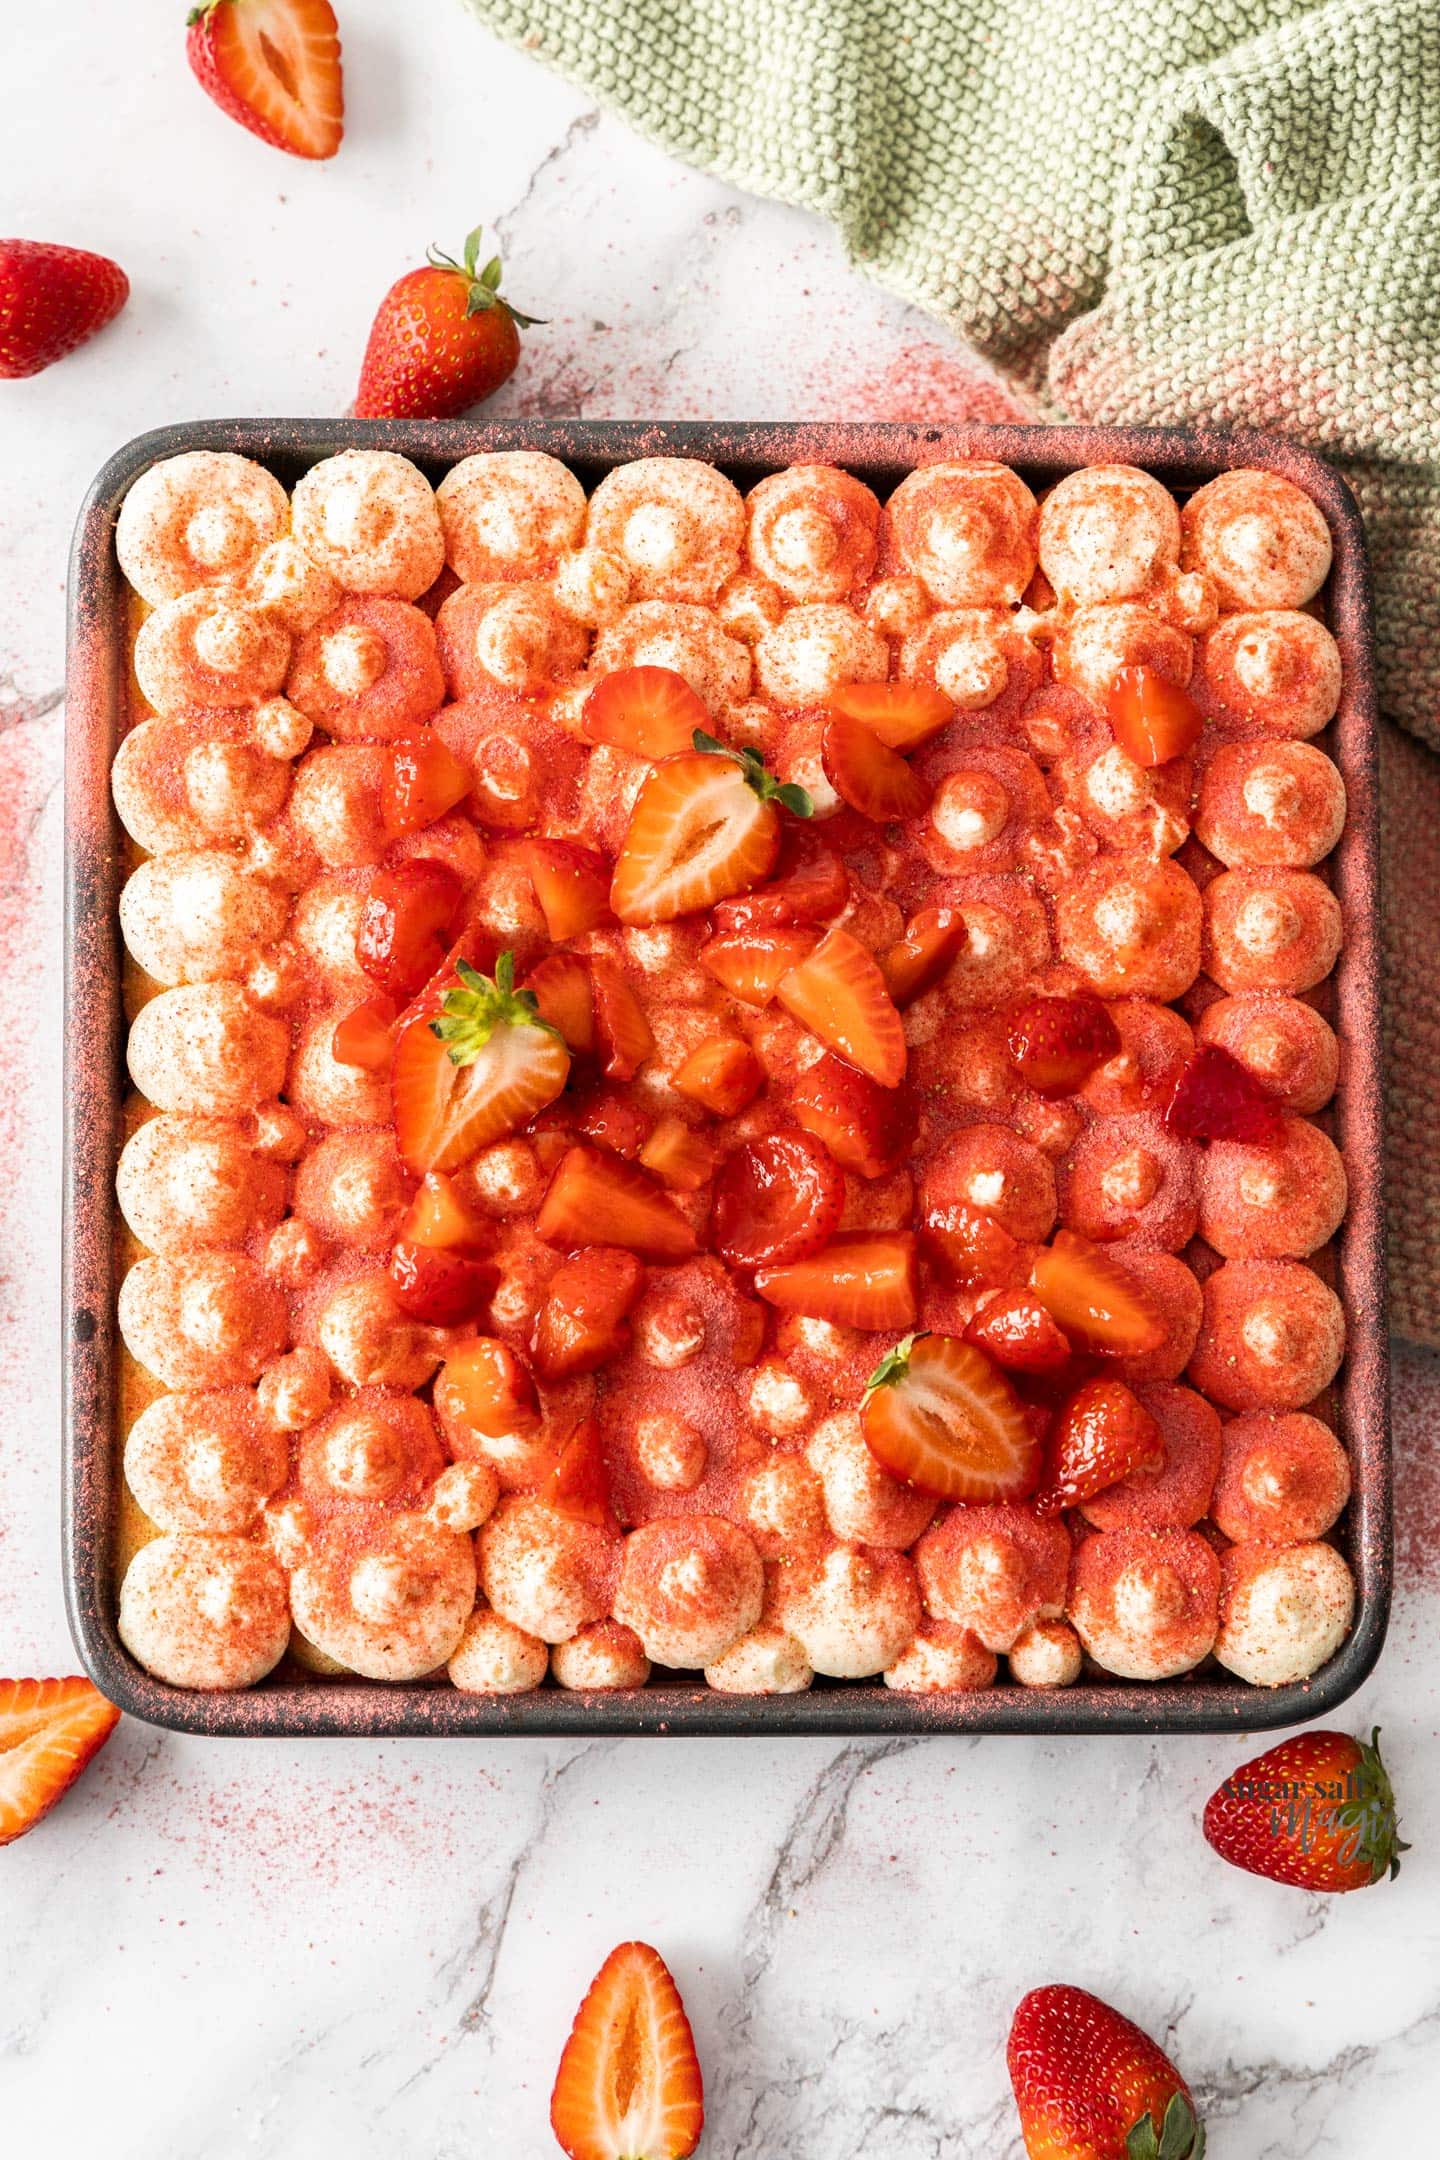 Top down view of strawberry tiramisu in a baking pan.